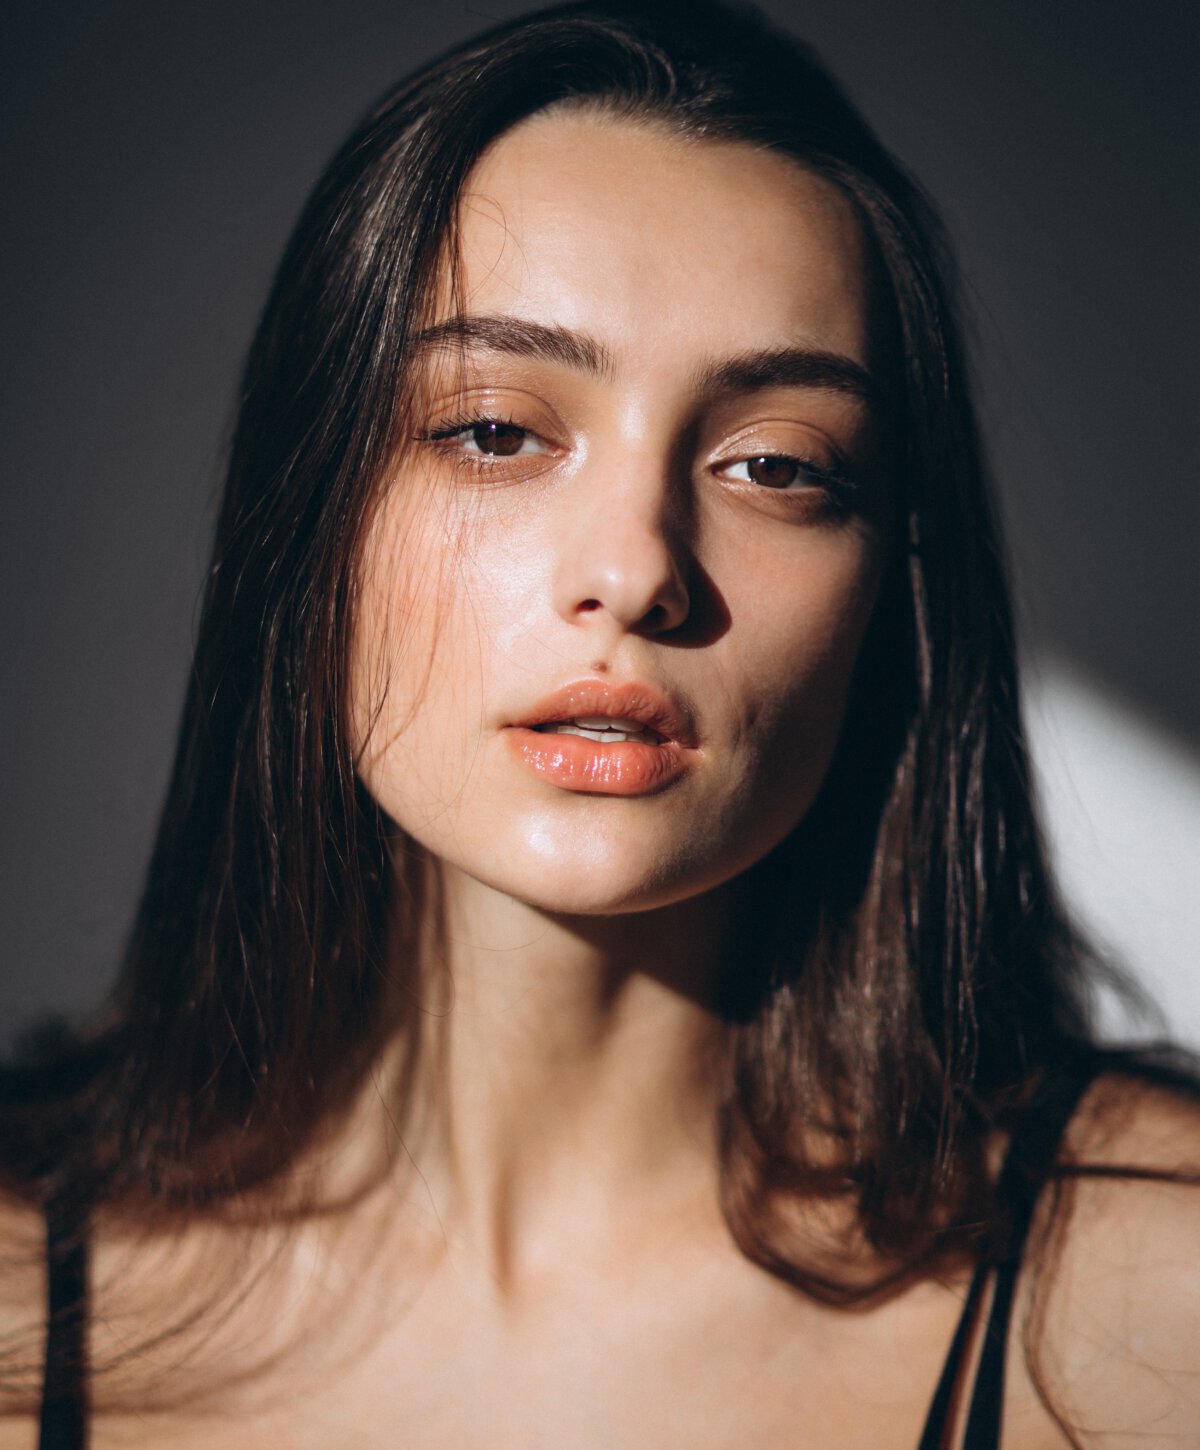 Long Island lip augmentation model with dark hair